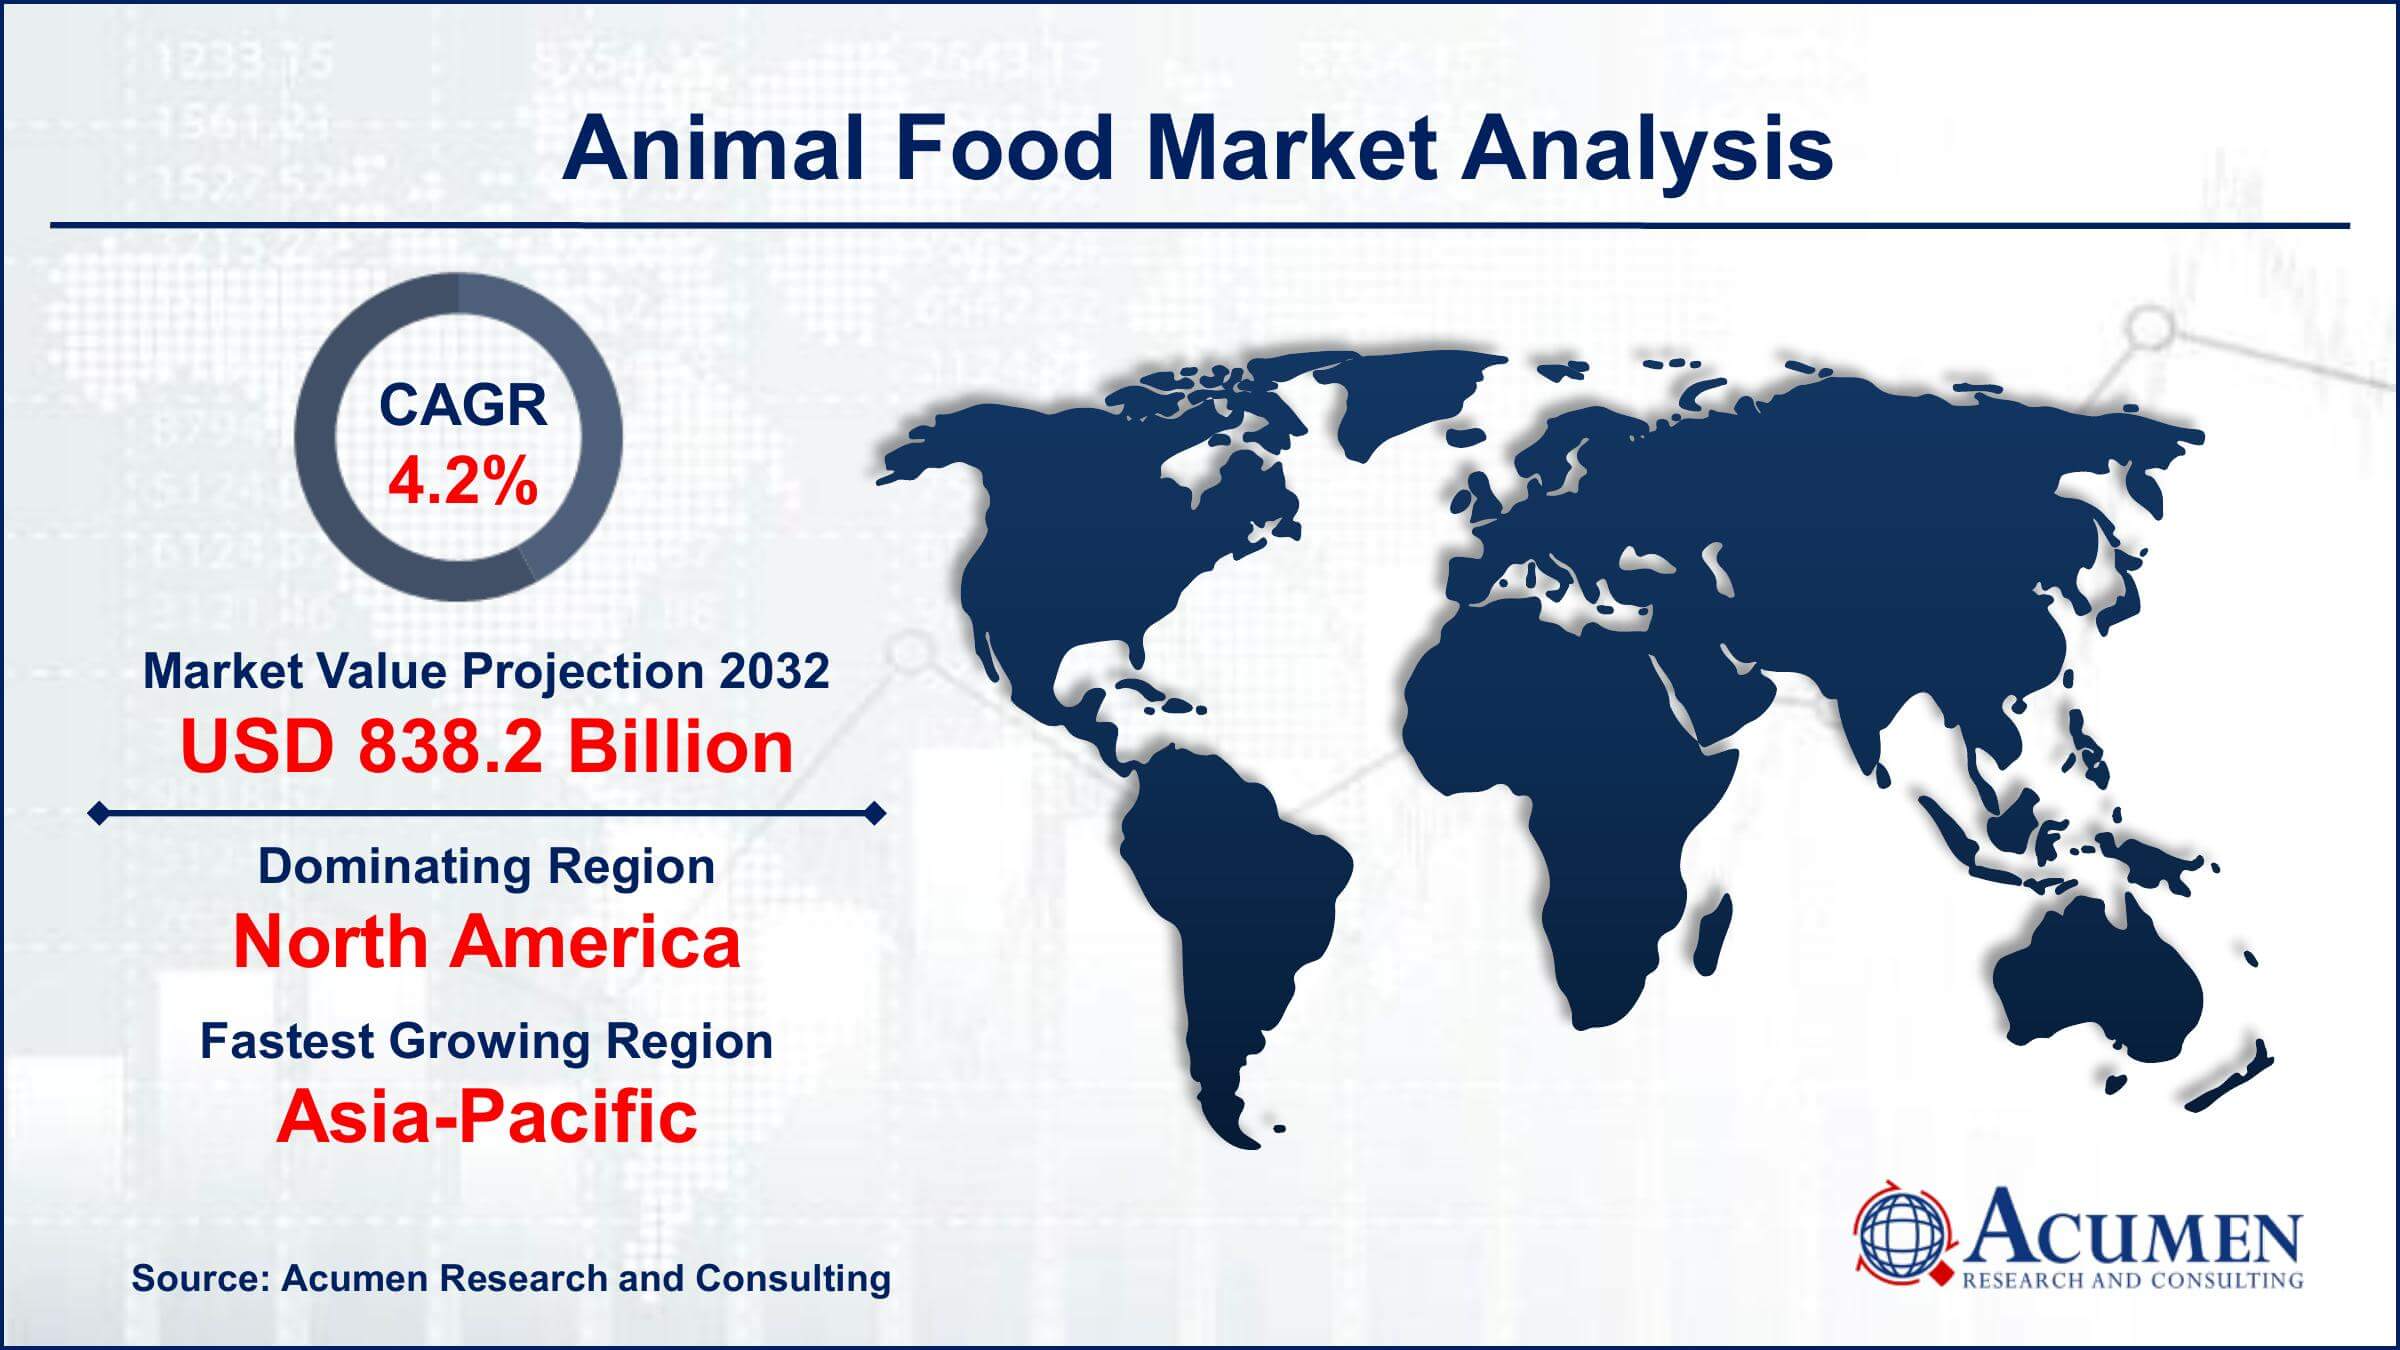 Global Animal Food Market Trends